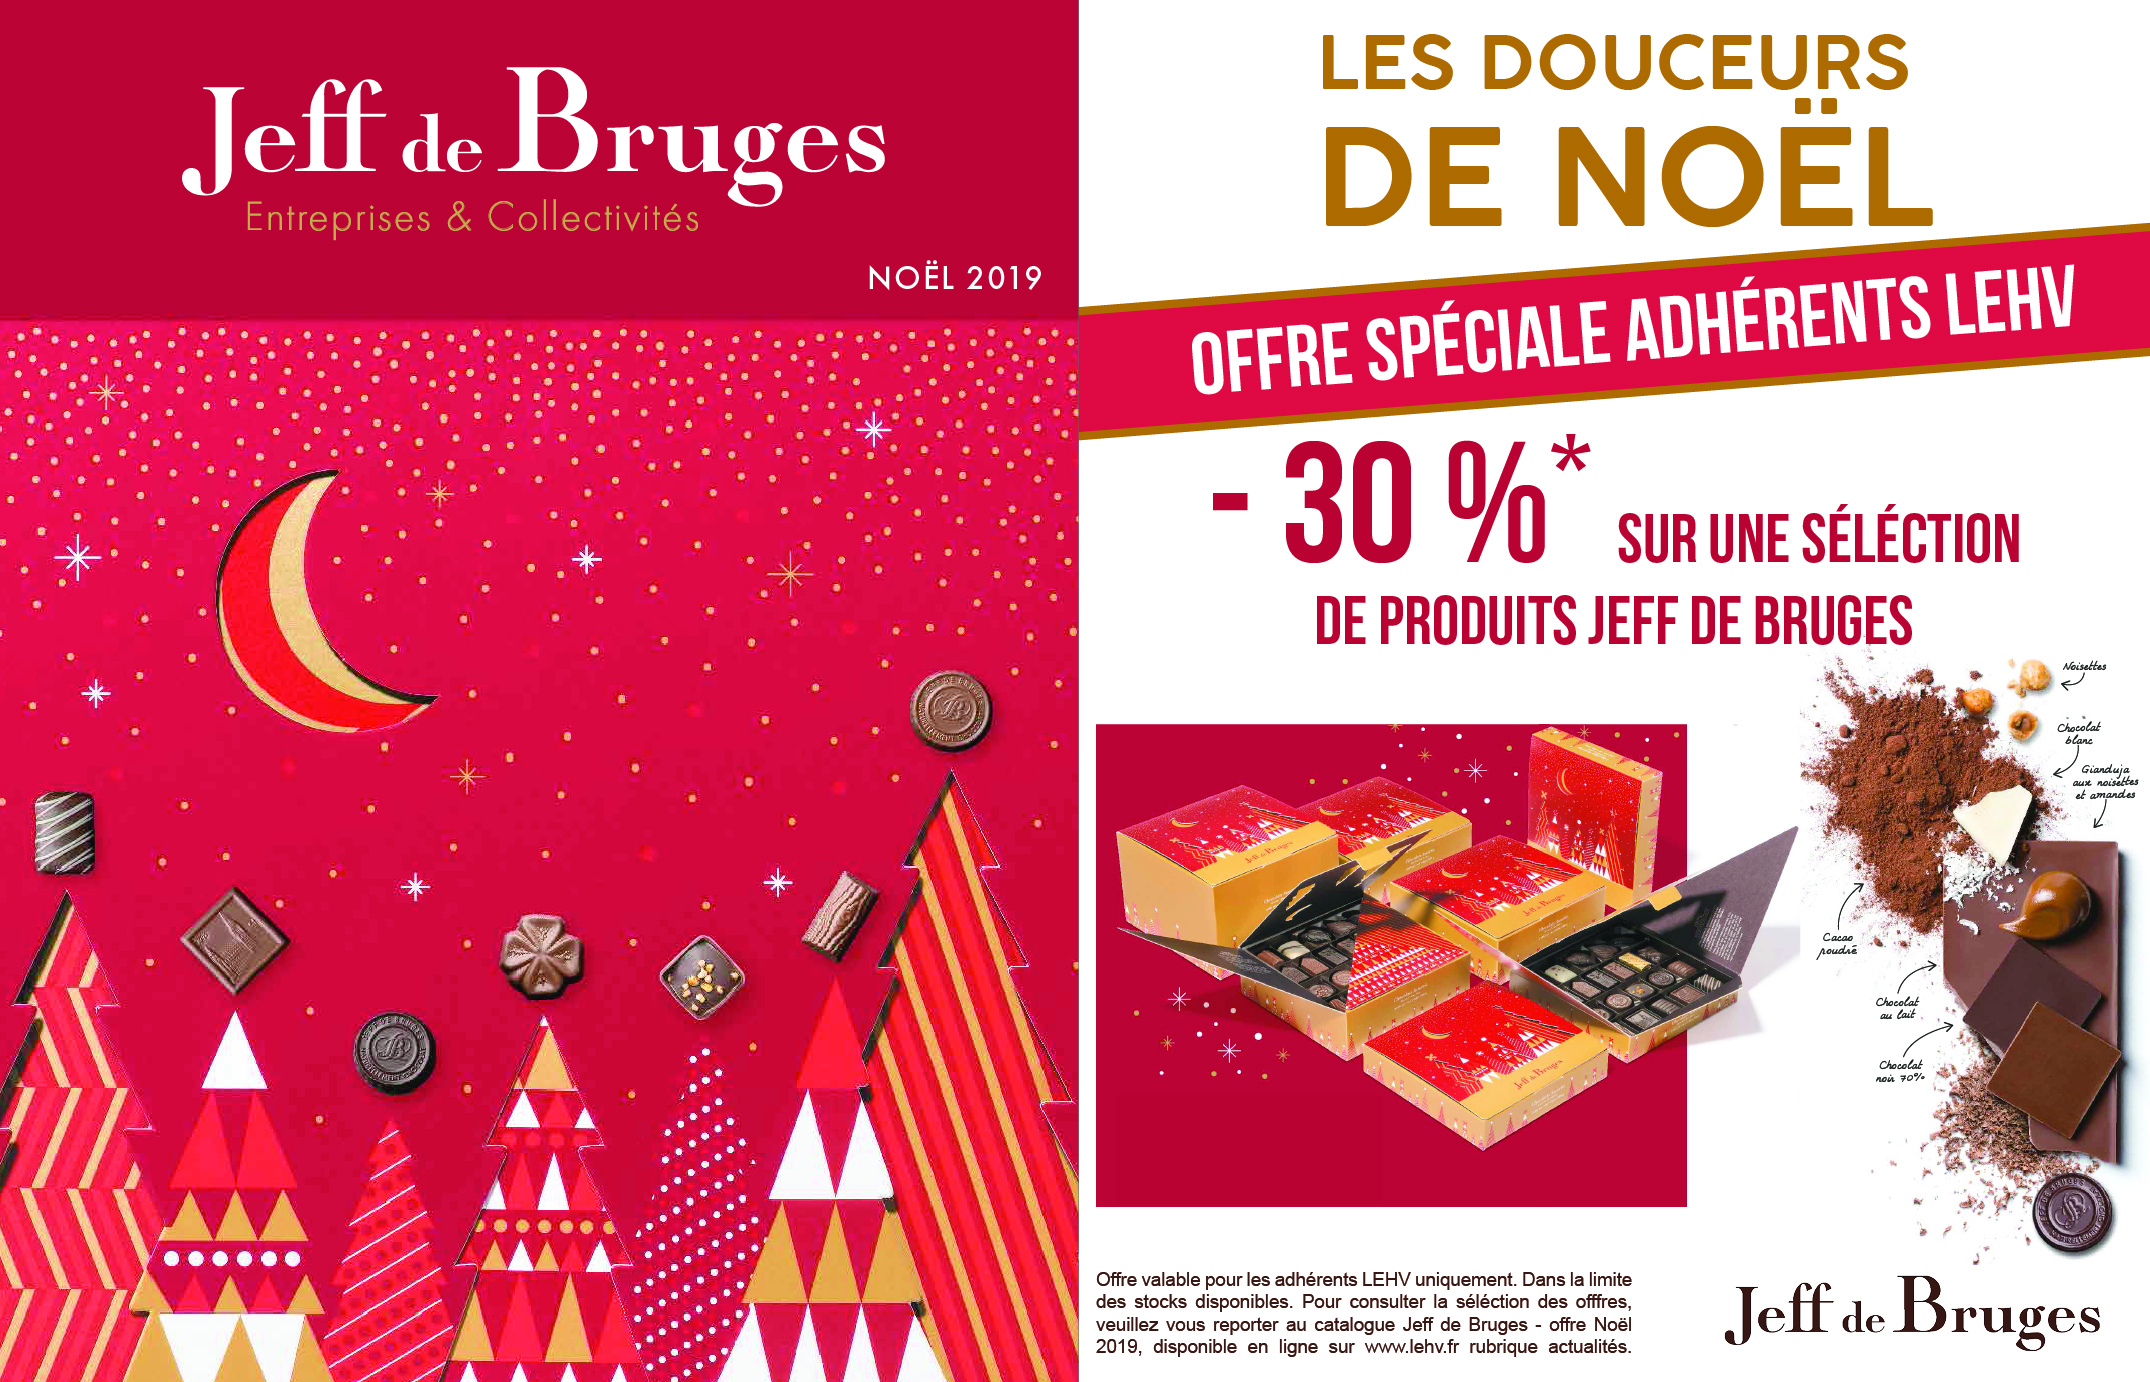 Chocolat de Noël - Jeff de Bruges